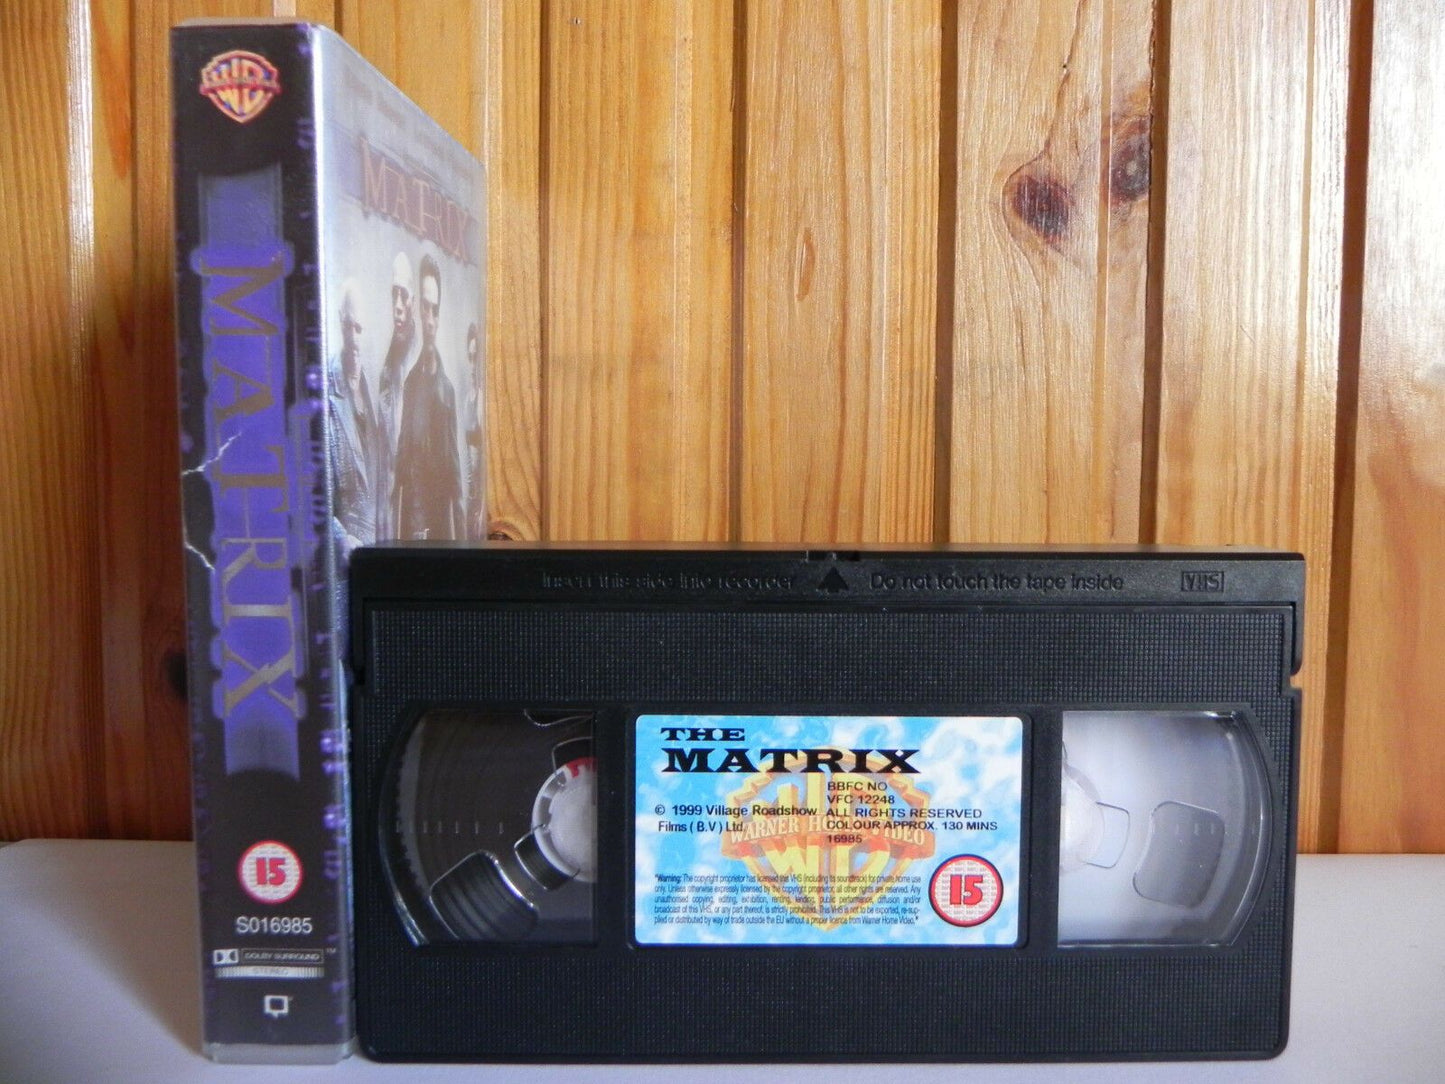 Matrix; [Warner] Small Box - Sci-Fi - Keanu Reeves / Laurence Fishburne - Pal VHS-